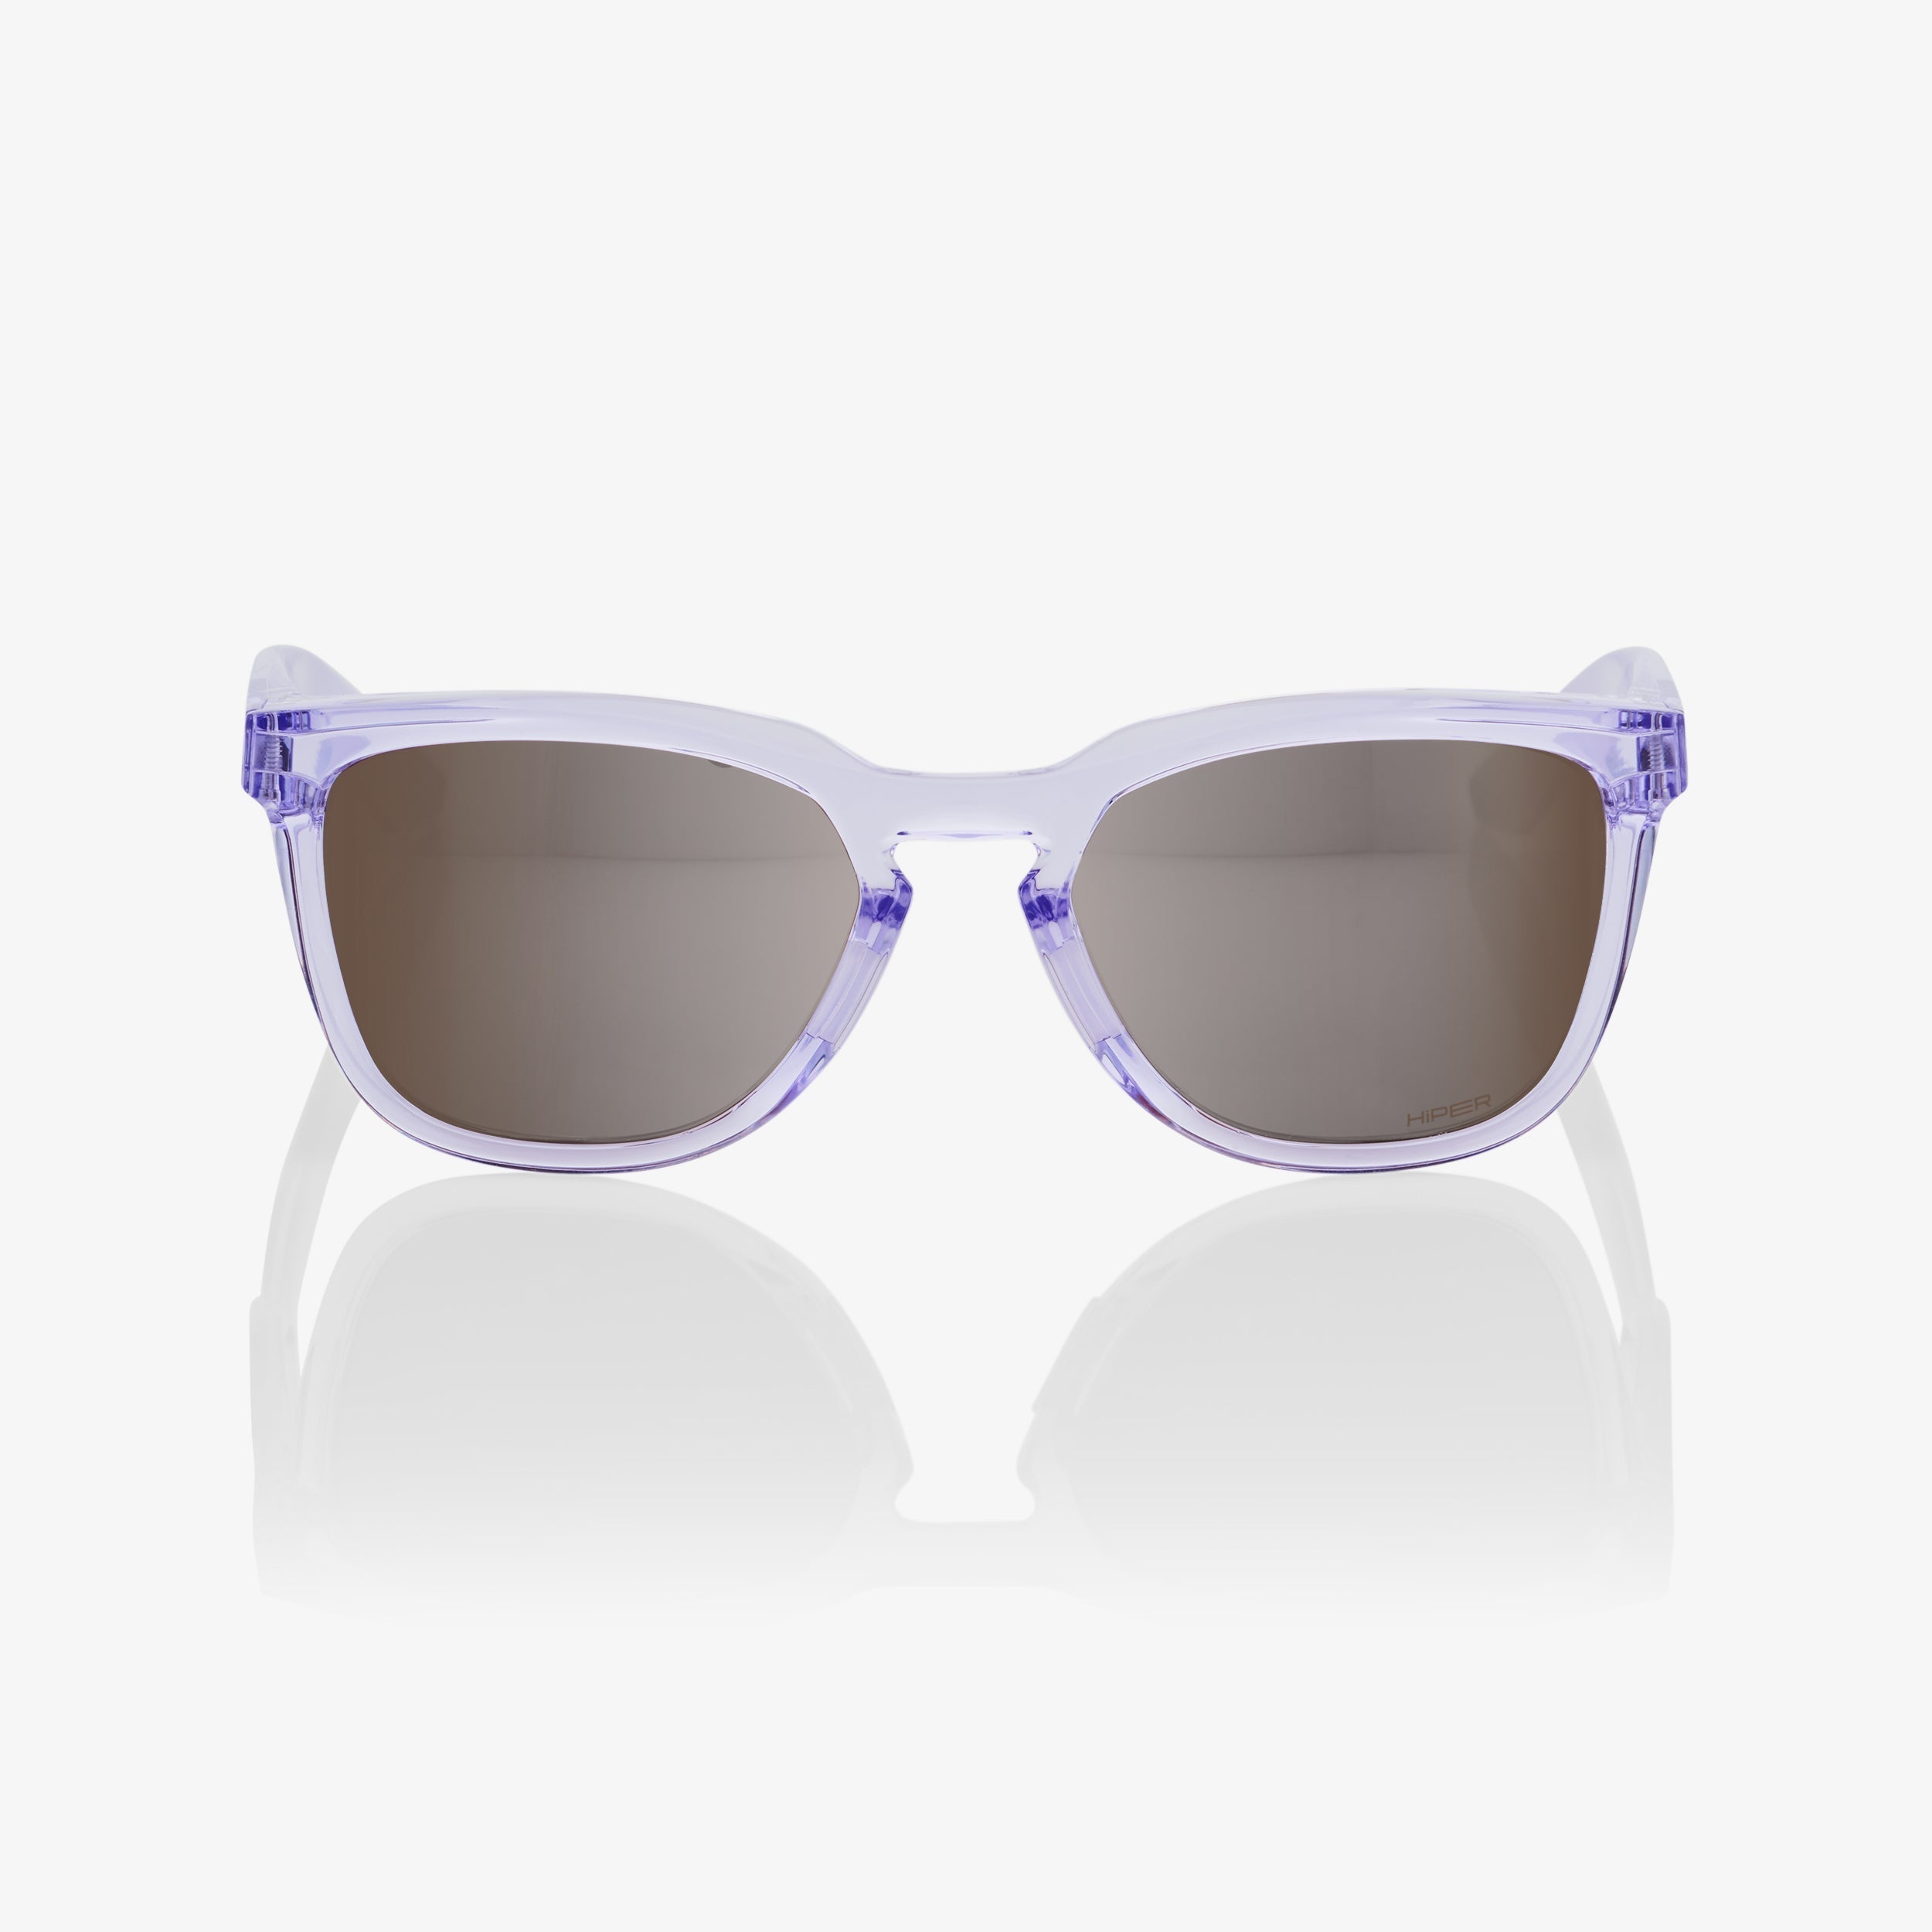 HUDSON - Polished Translucent Lavender - HiPER Silver Mirror Lens - Secondary